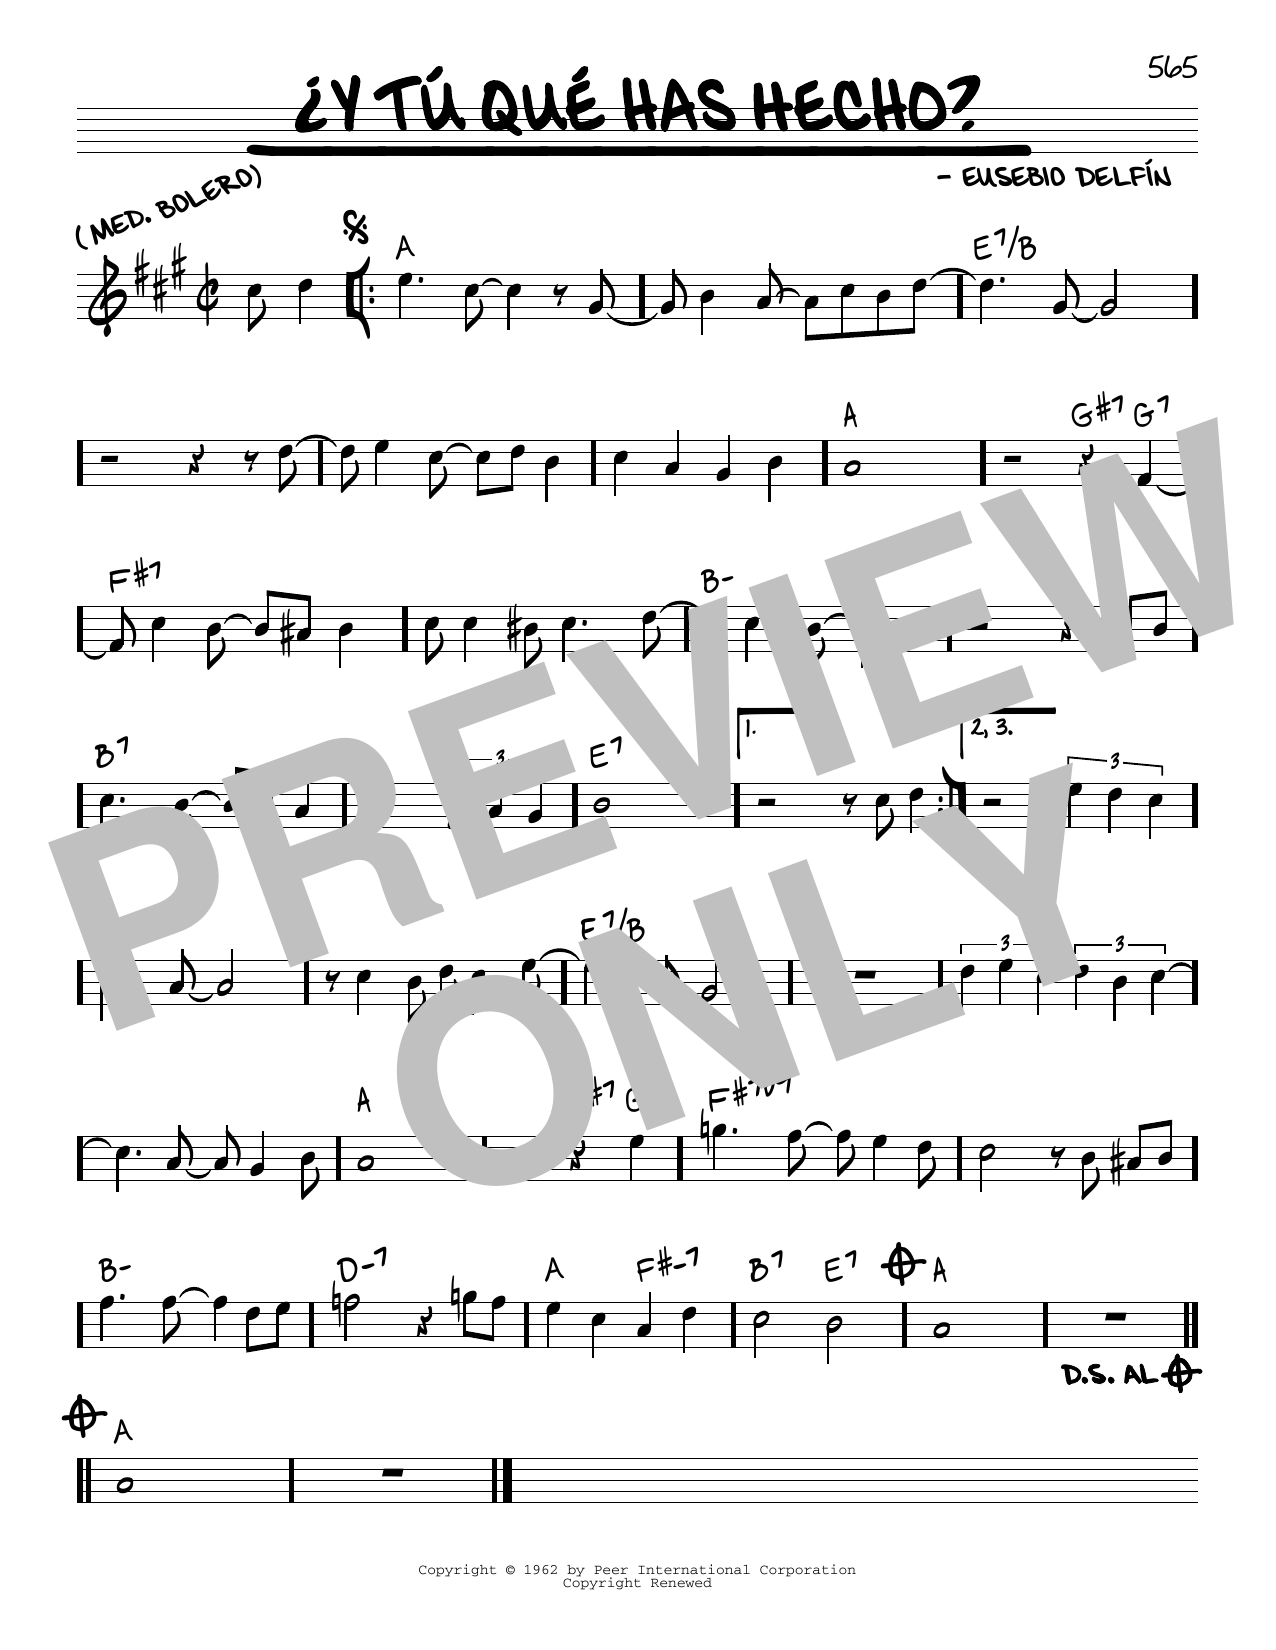 Eusebio Delfin ¿Y Tú Qué Has Hecho? Sheet Music Notes & Chords for Real Book – Melody & Chords - Download or Print PDF